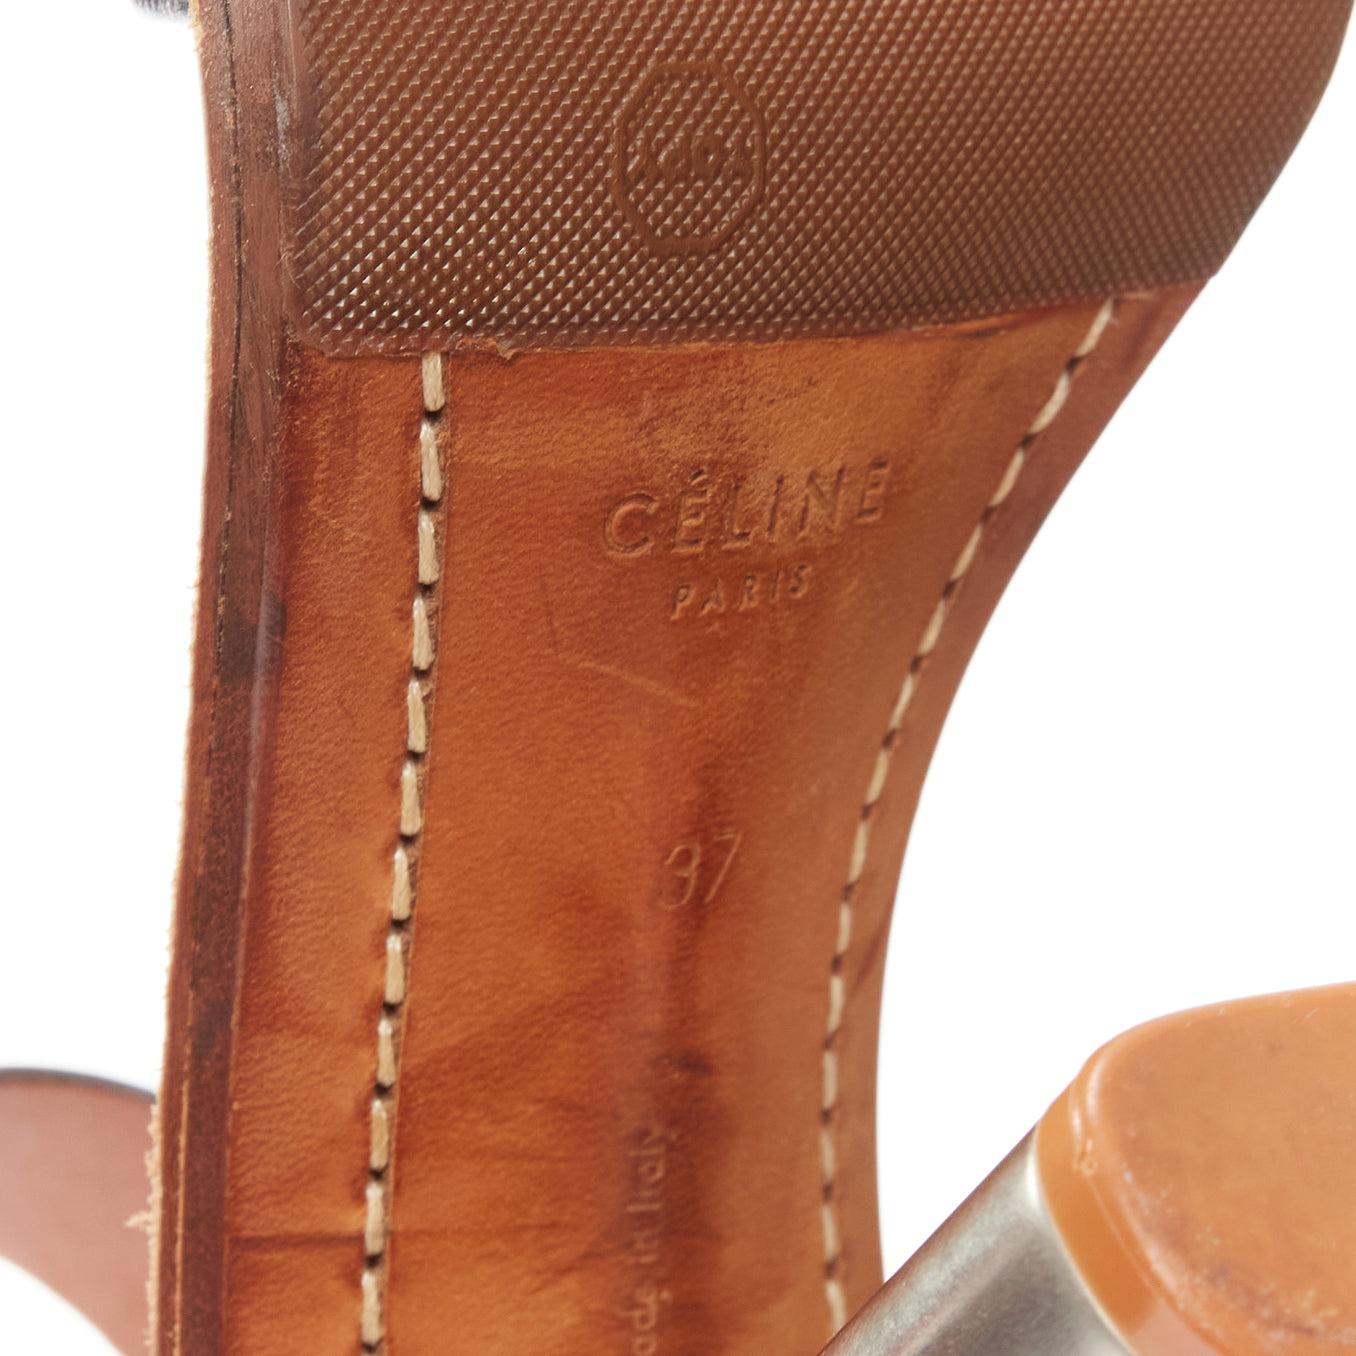 CELINE Phoebe Philo Bam Bam black open toe silver metal block heel sandal EU37 For Sale 6